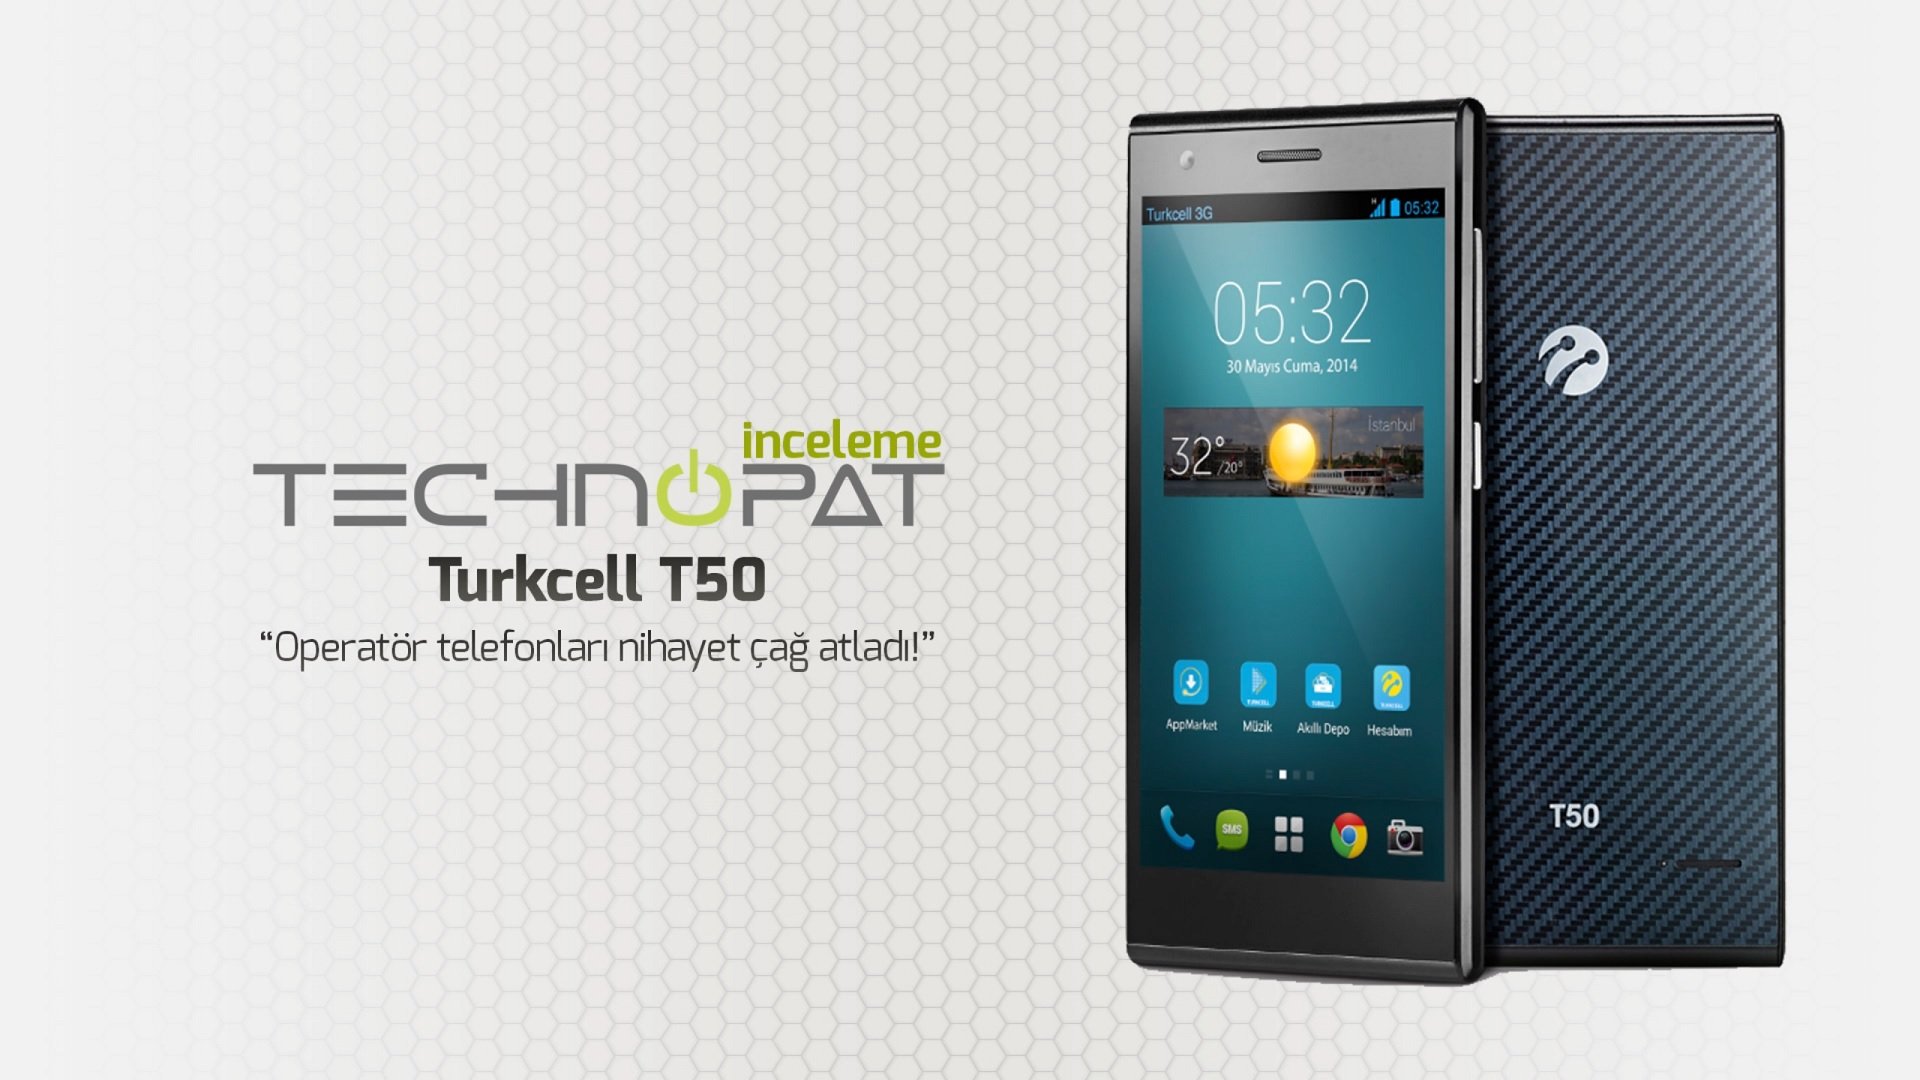 Turkcell T50 İncelemesi - Technopat